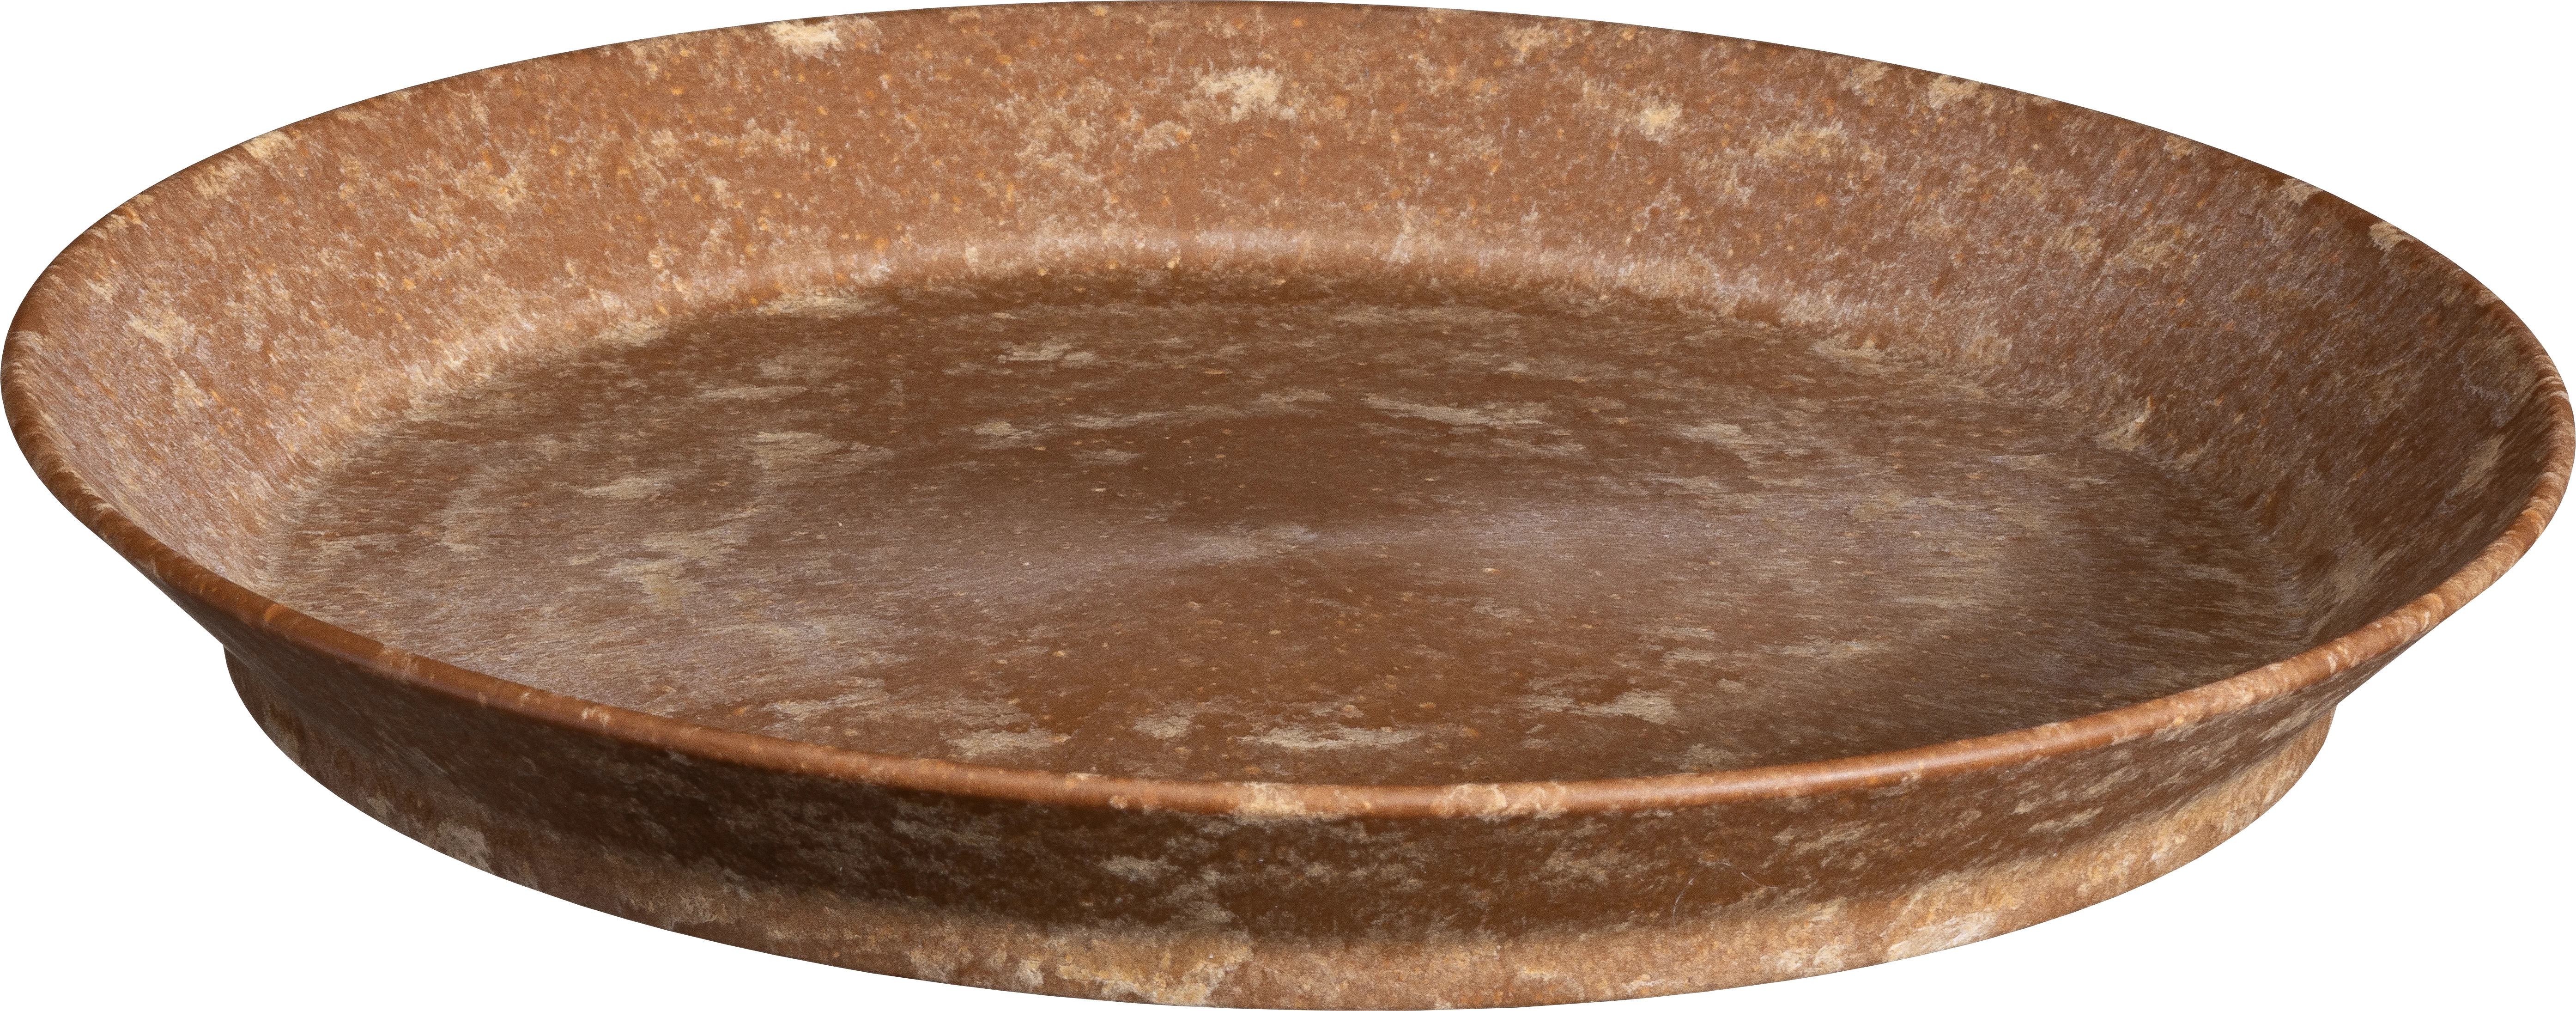 Luups tallerken uden fane, brun, ø25 cm